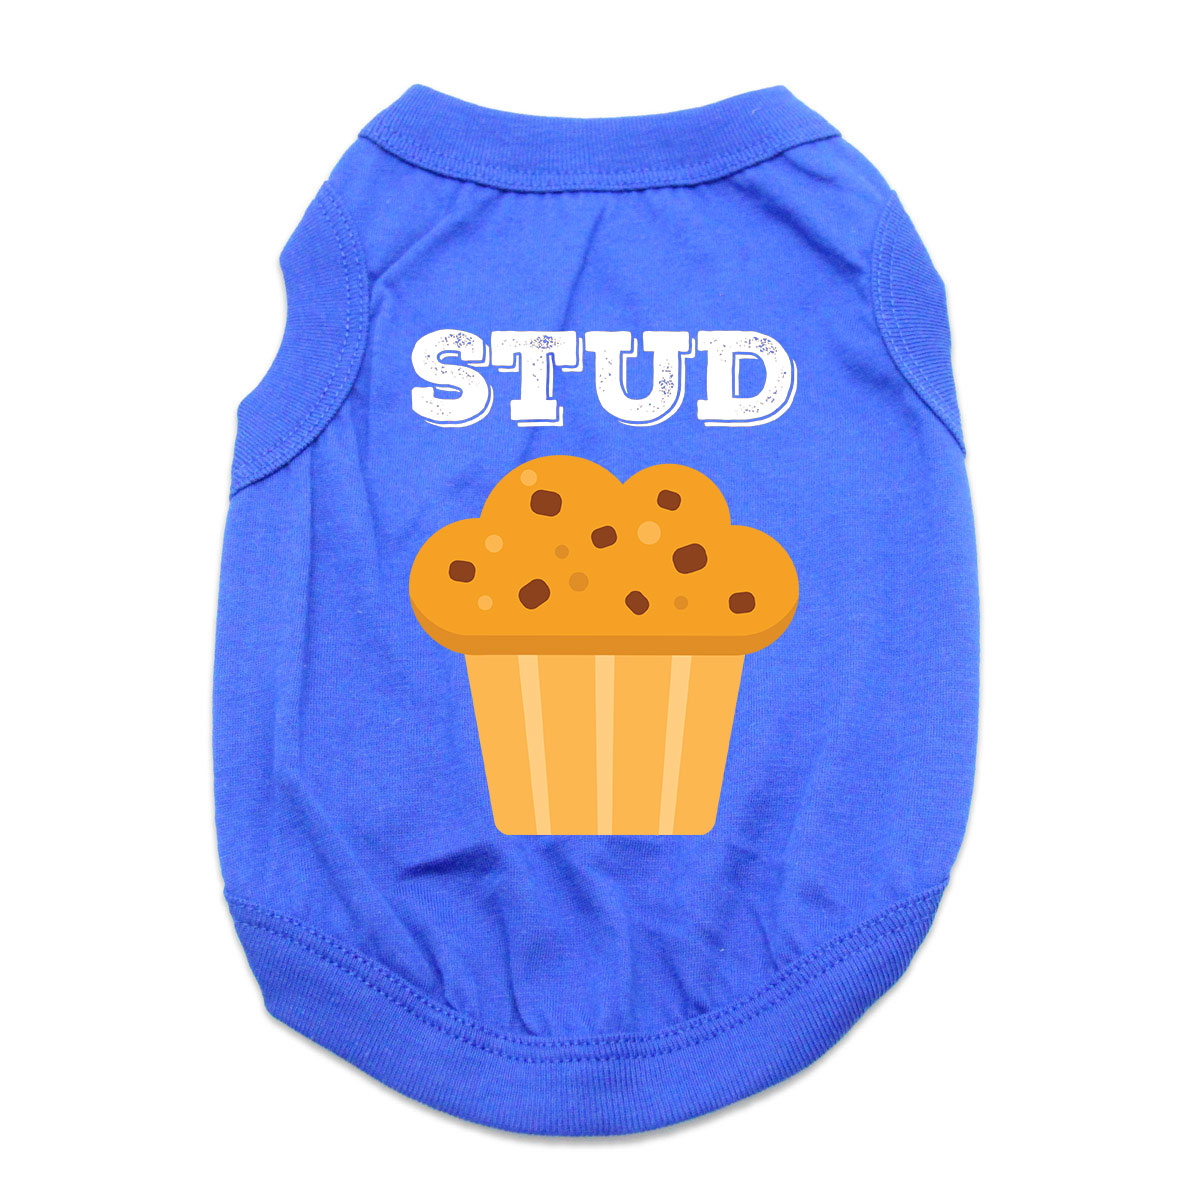 Stud Muffin Dog Shirt - Blue